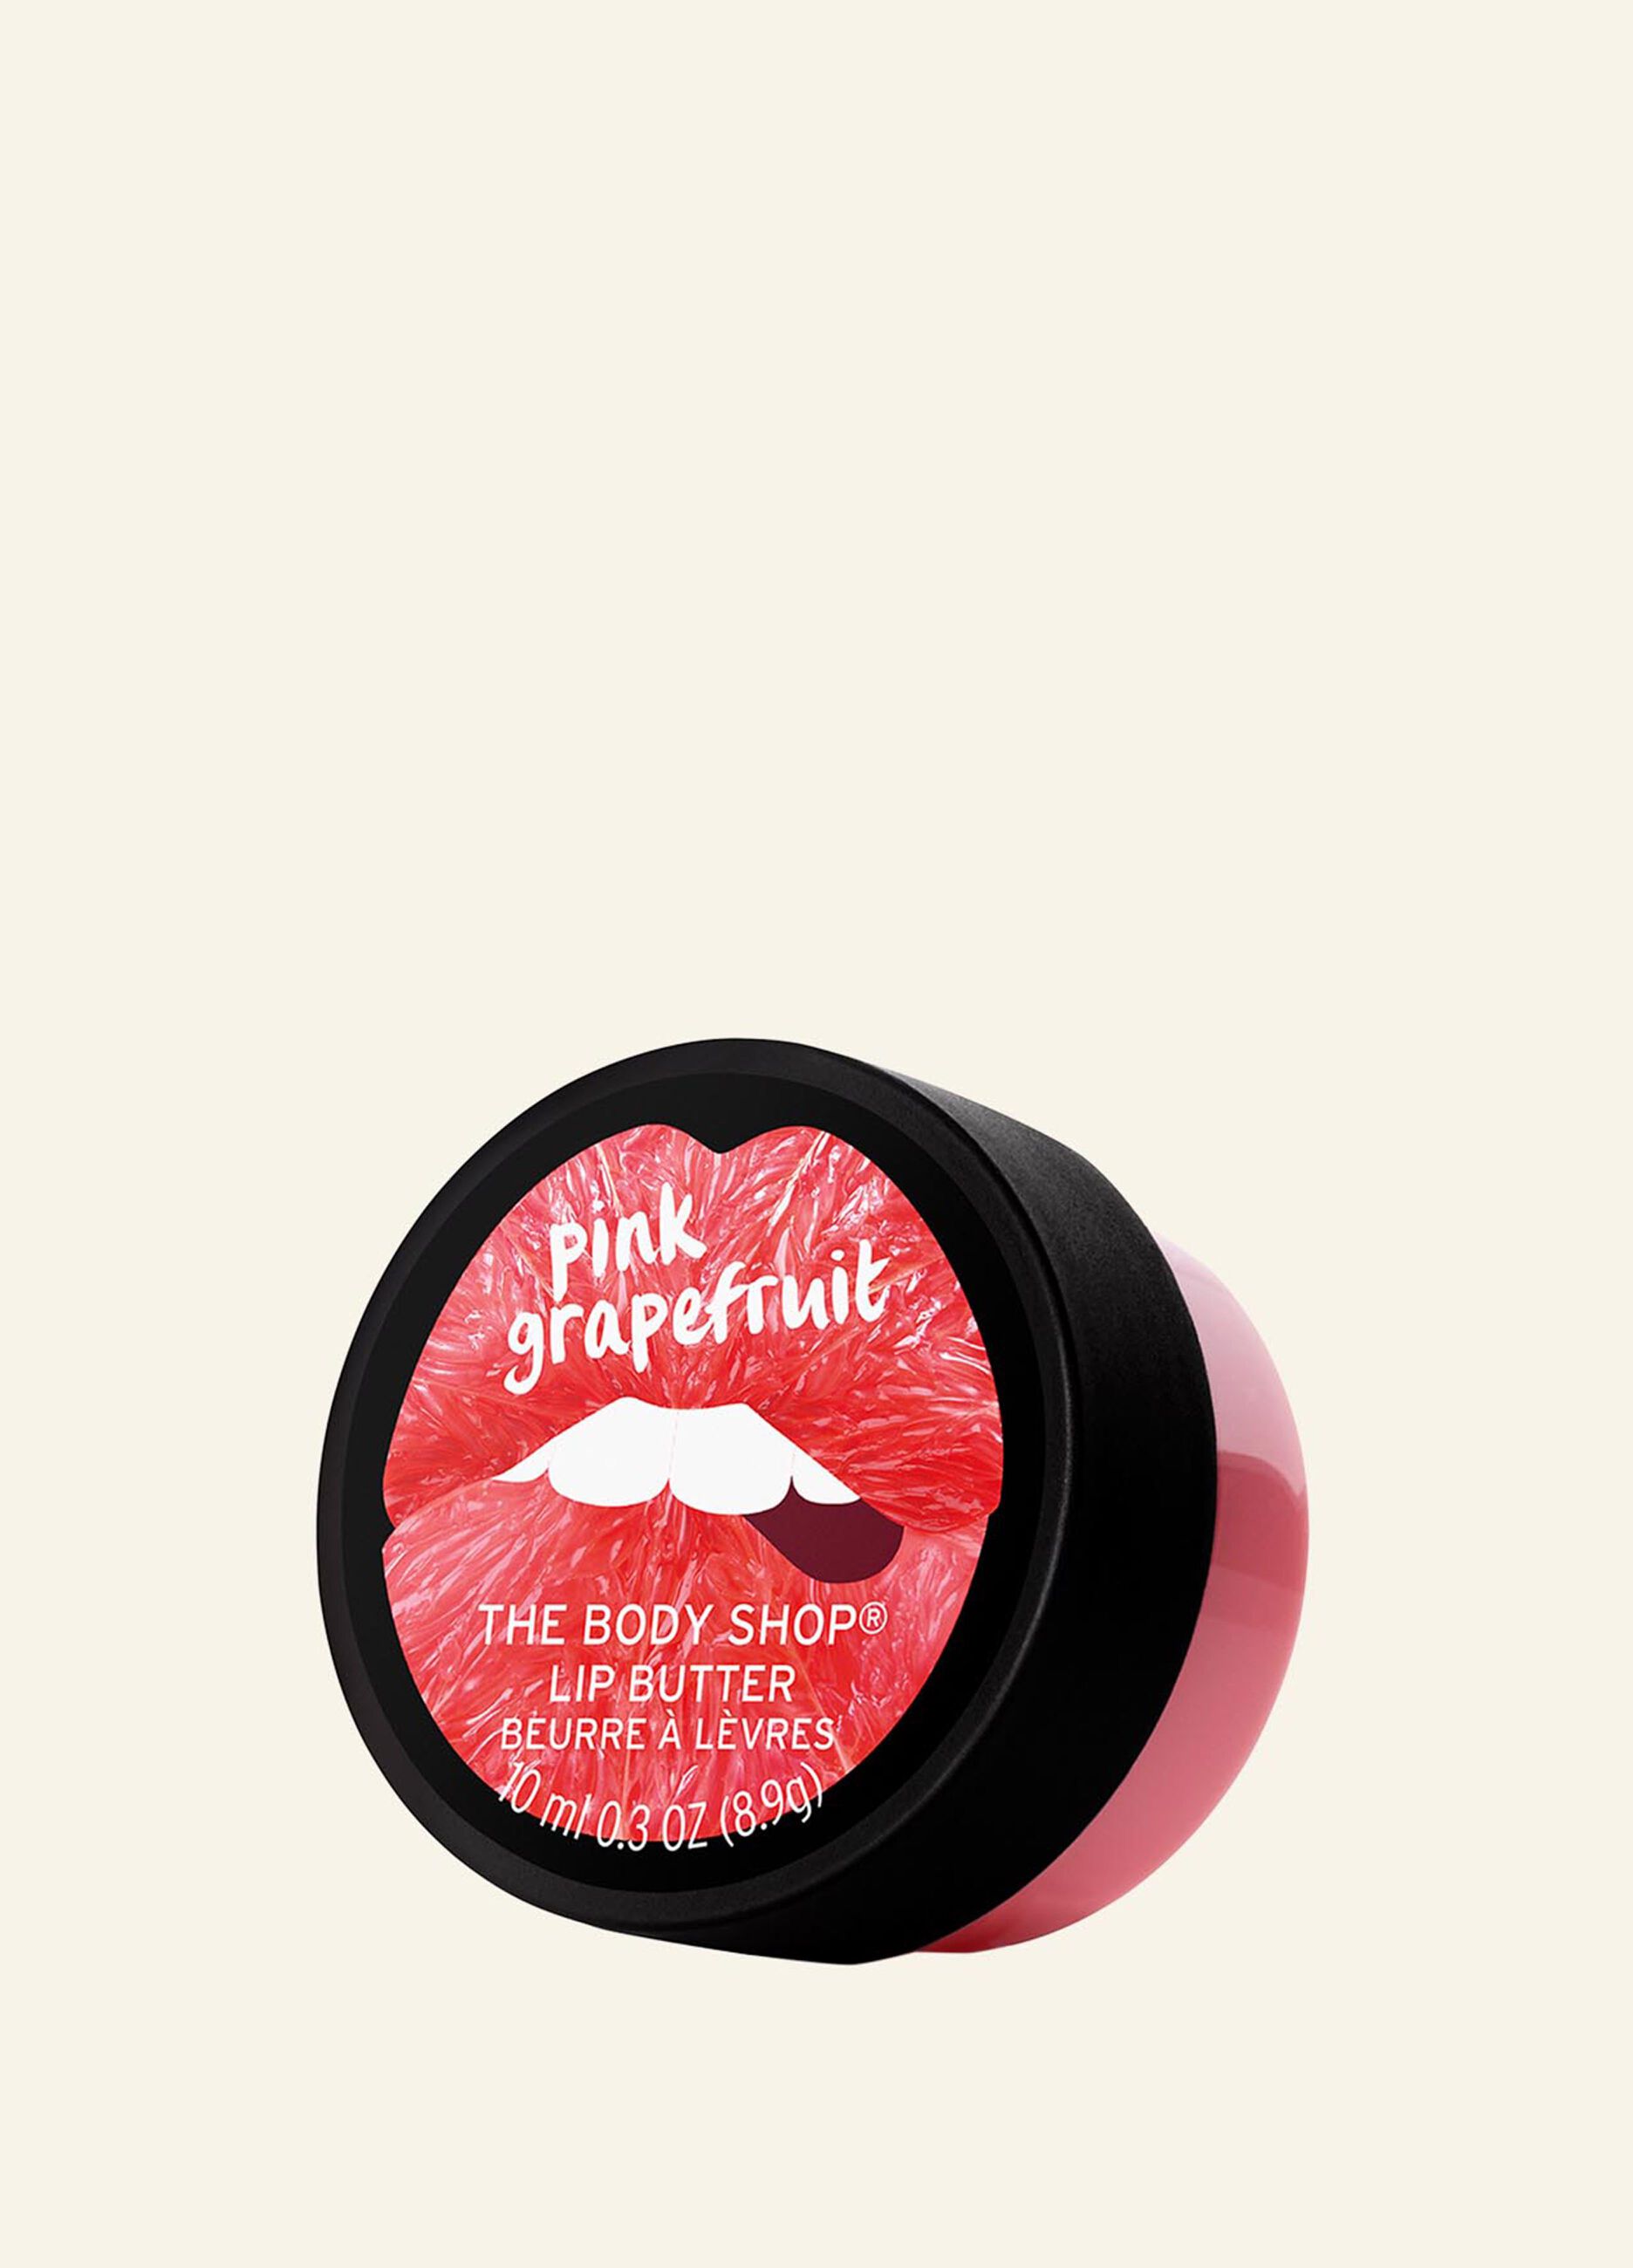 The Body Shop pink grapefruit lip balm